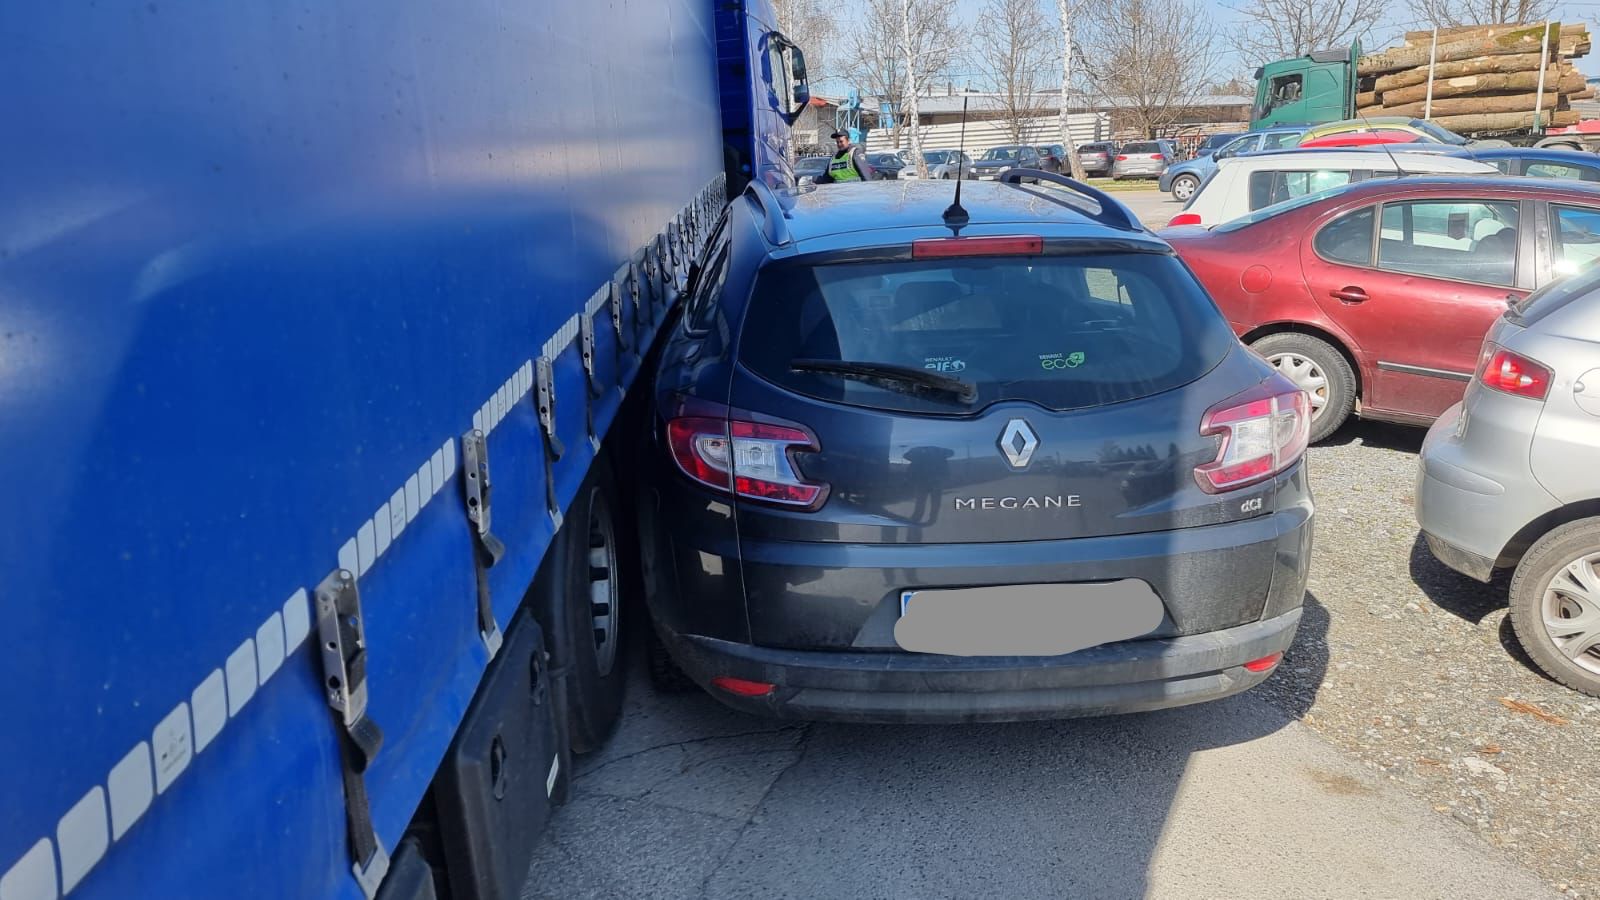 Požega.eu | Renault završio gotovo pod šleperom na ulazu u Spin valis [FOTO]